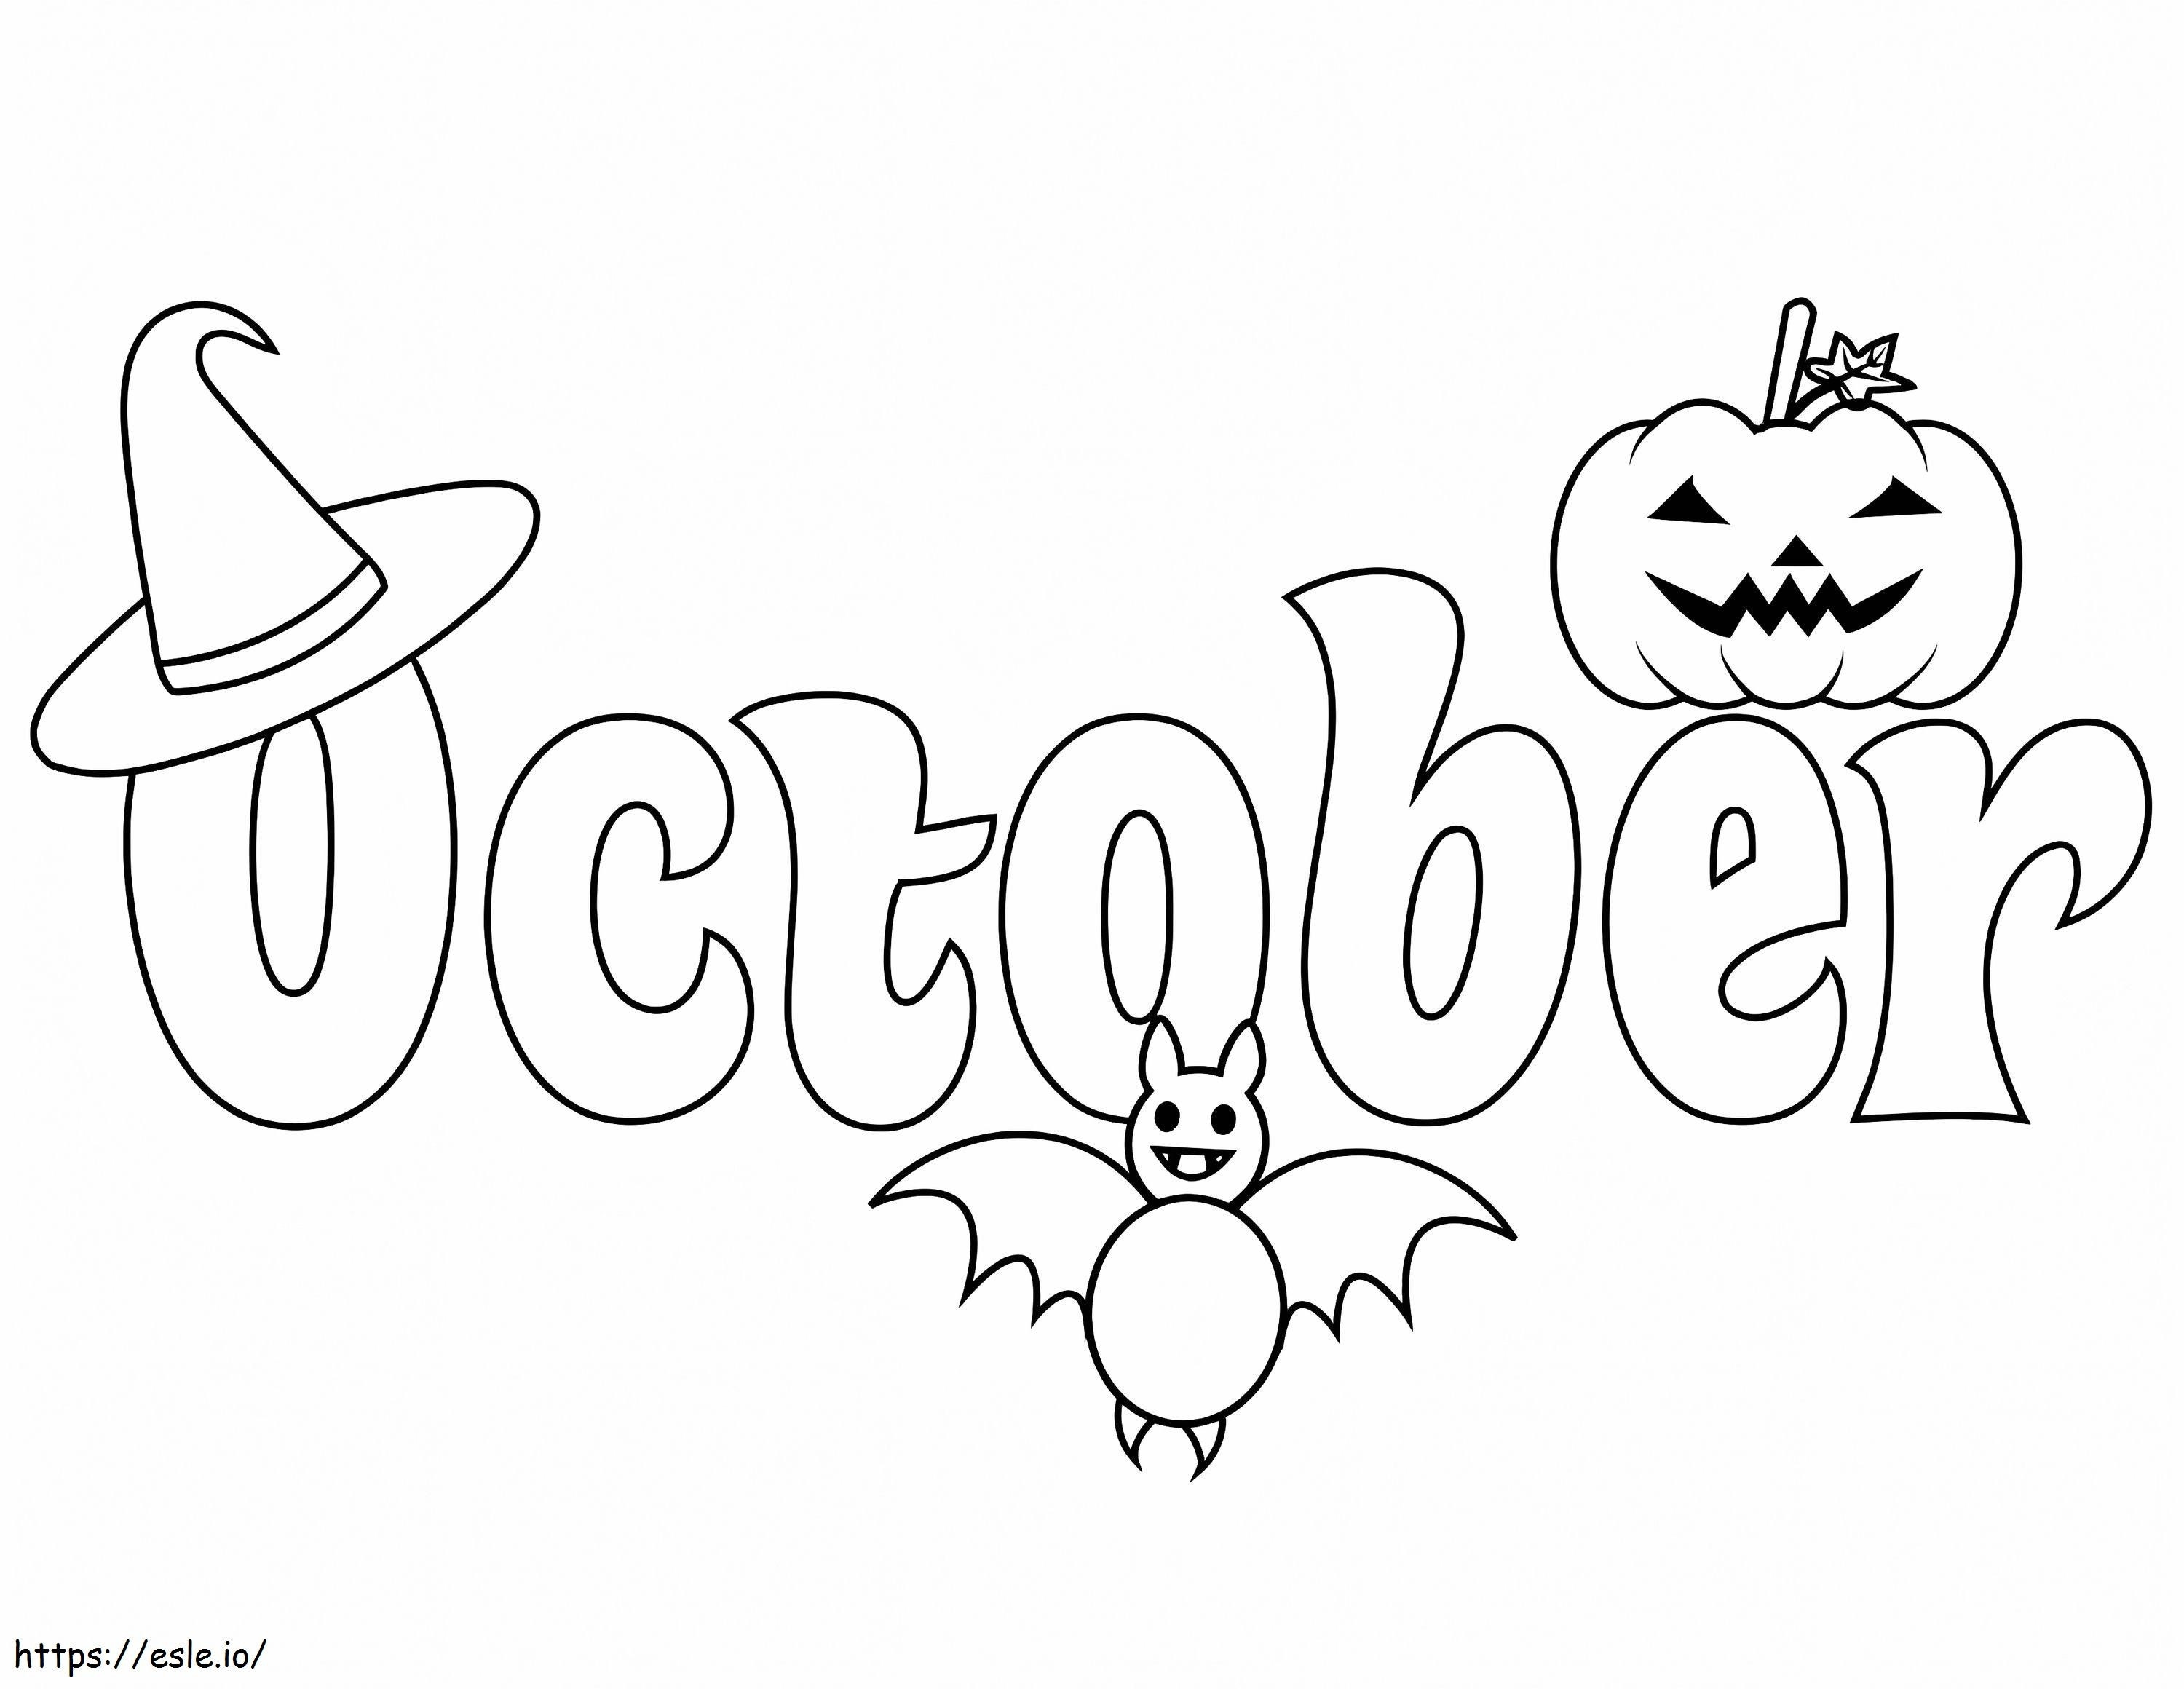 Creepy October coloring page